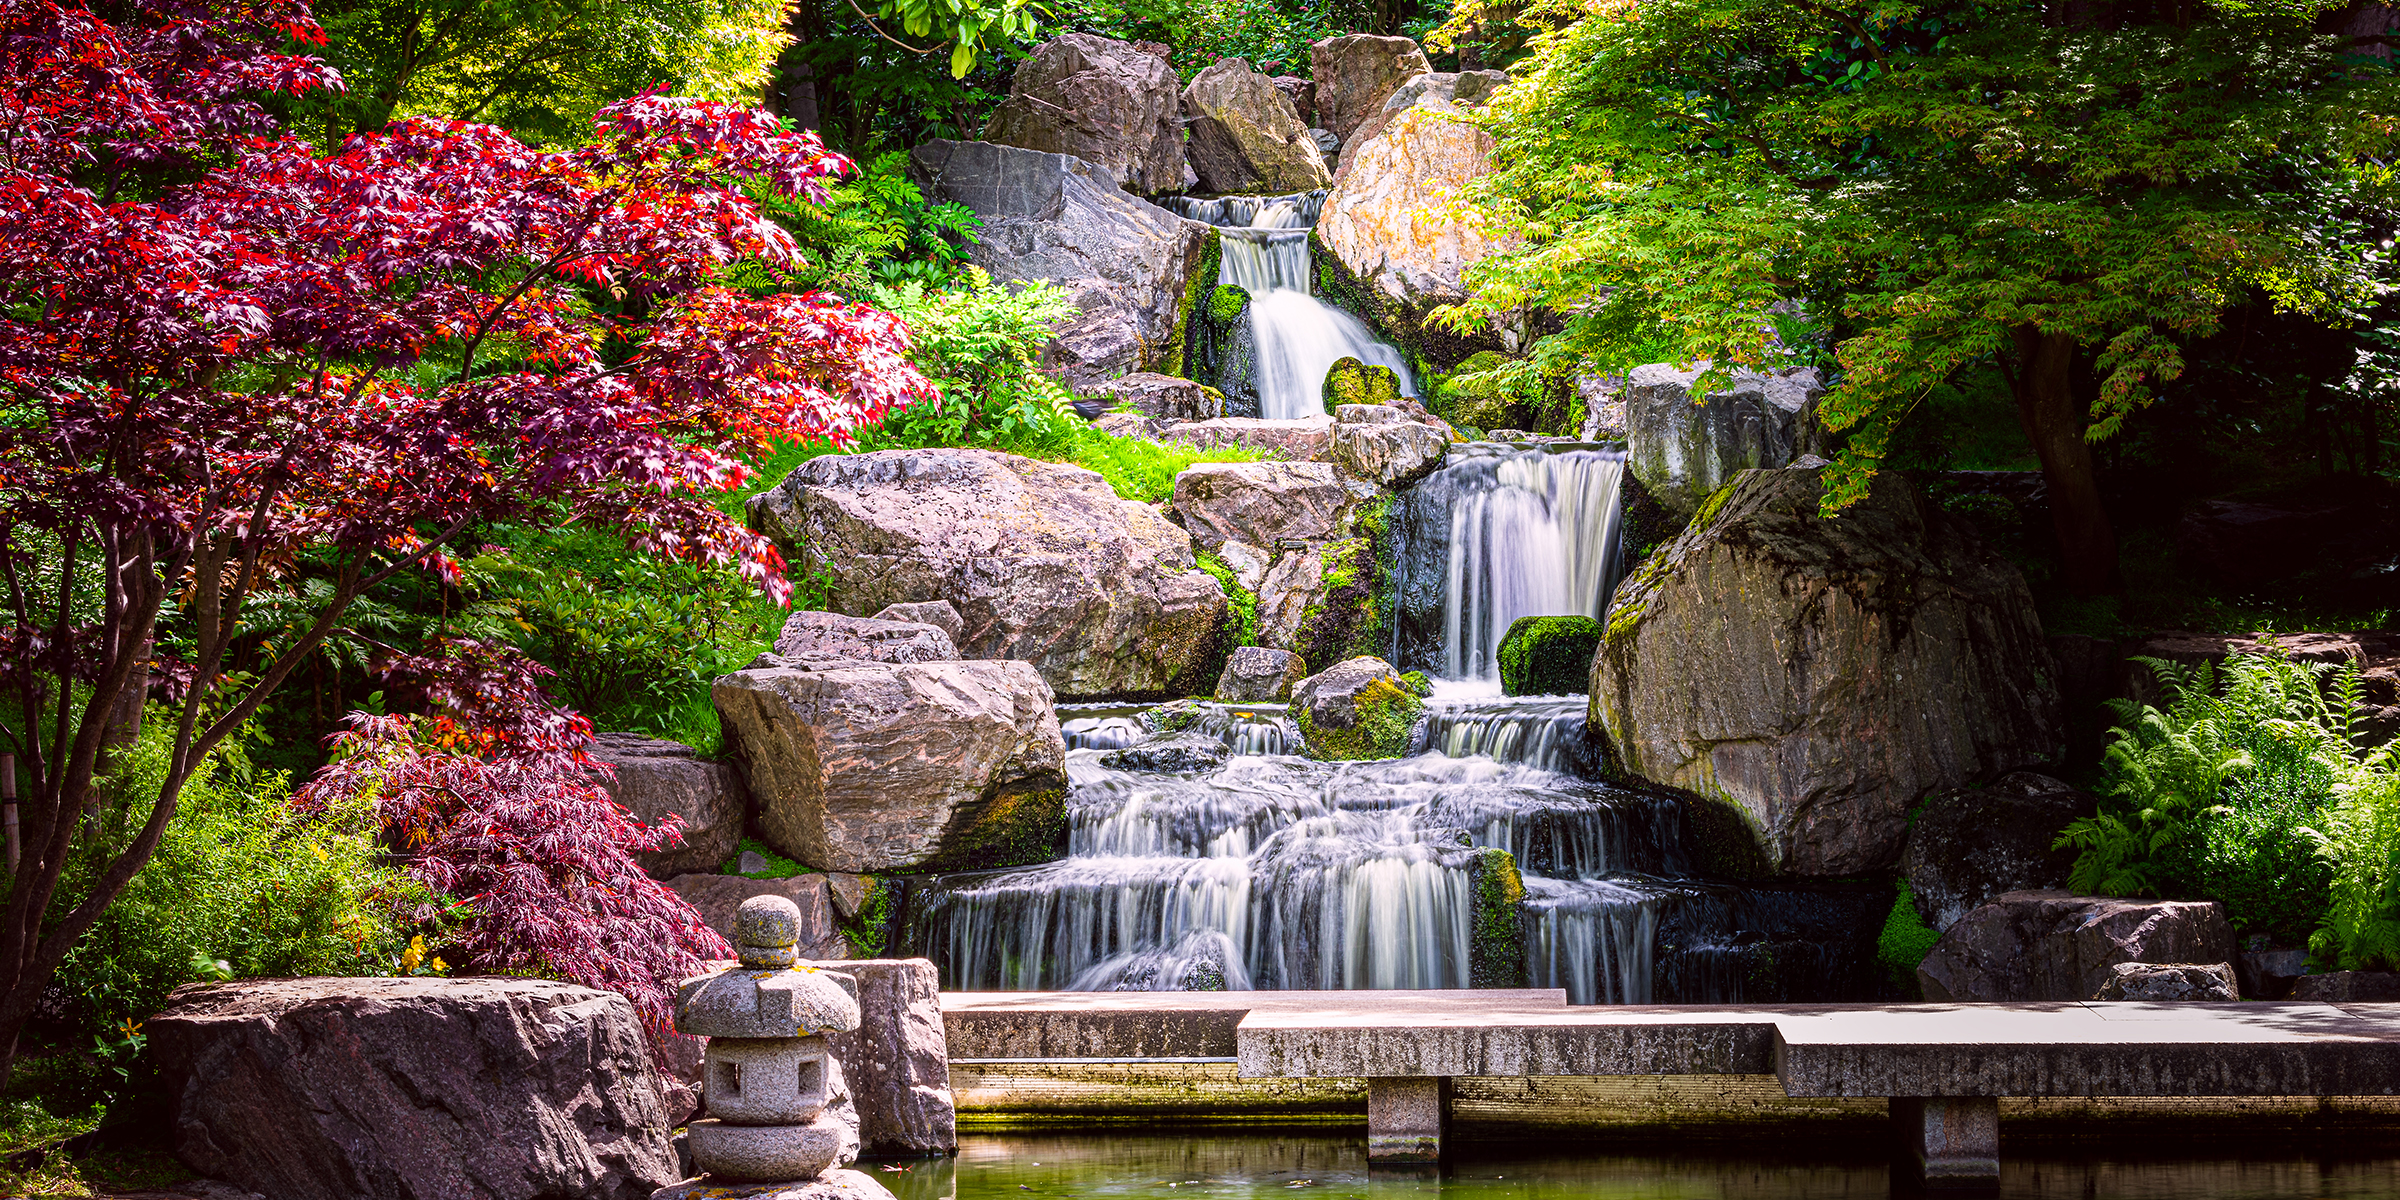 Kyoto garden, London | Source: Shutterstock